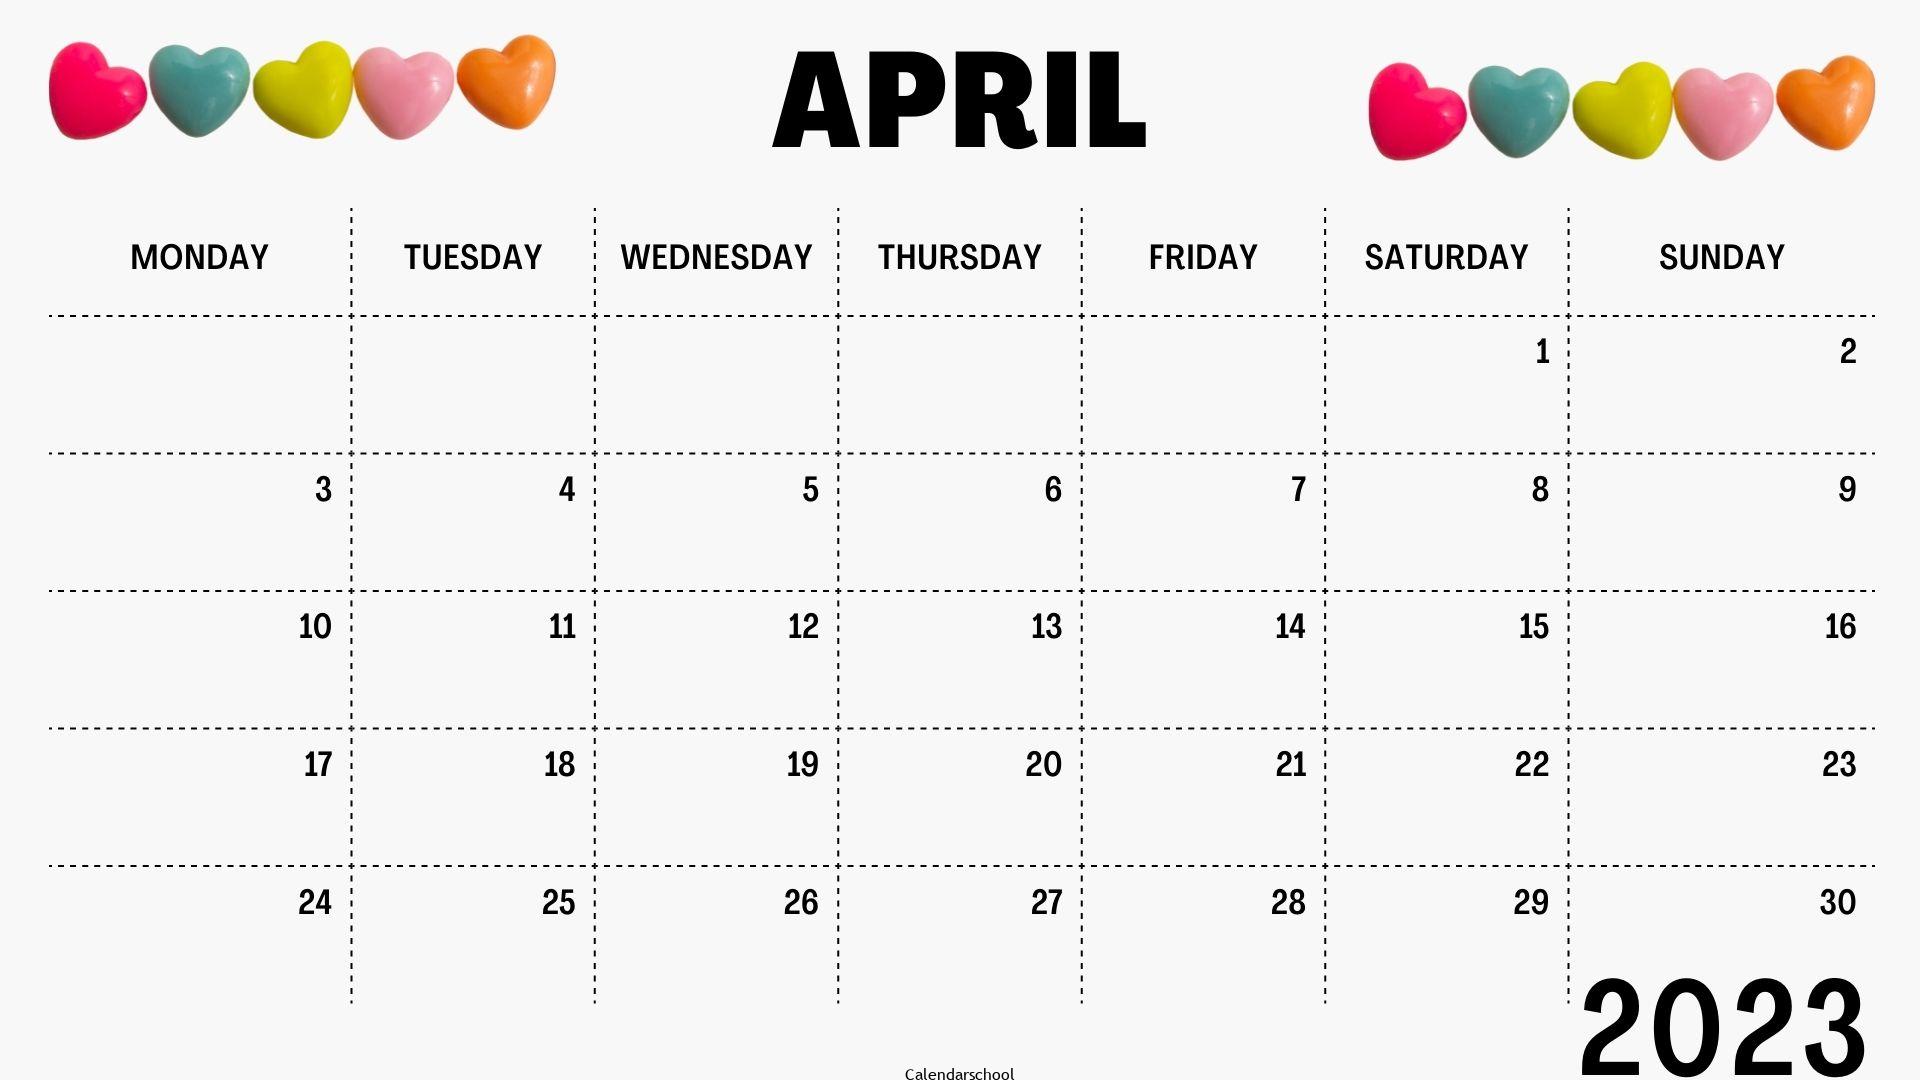 April 2023 Calendar PDF